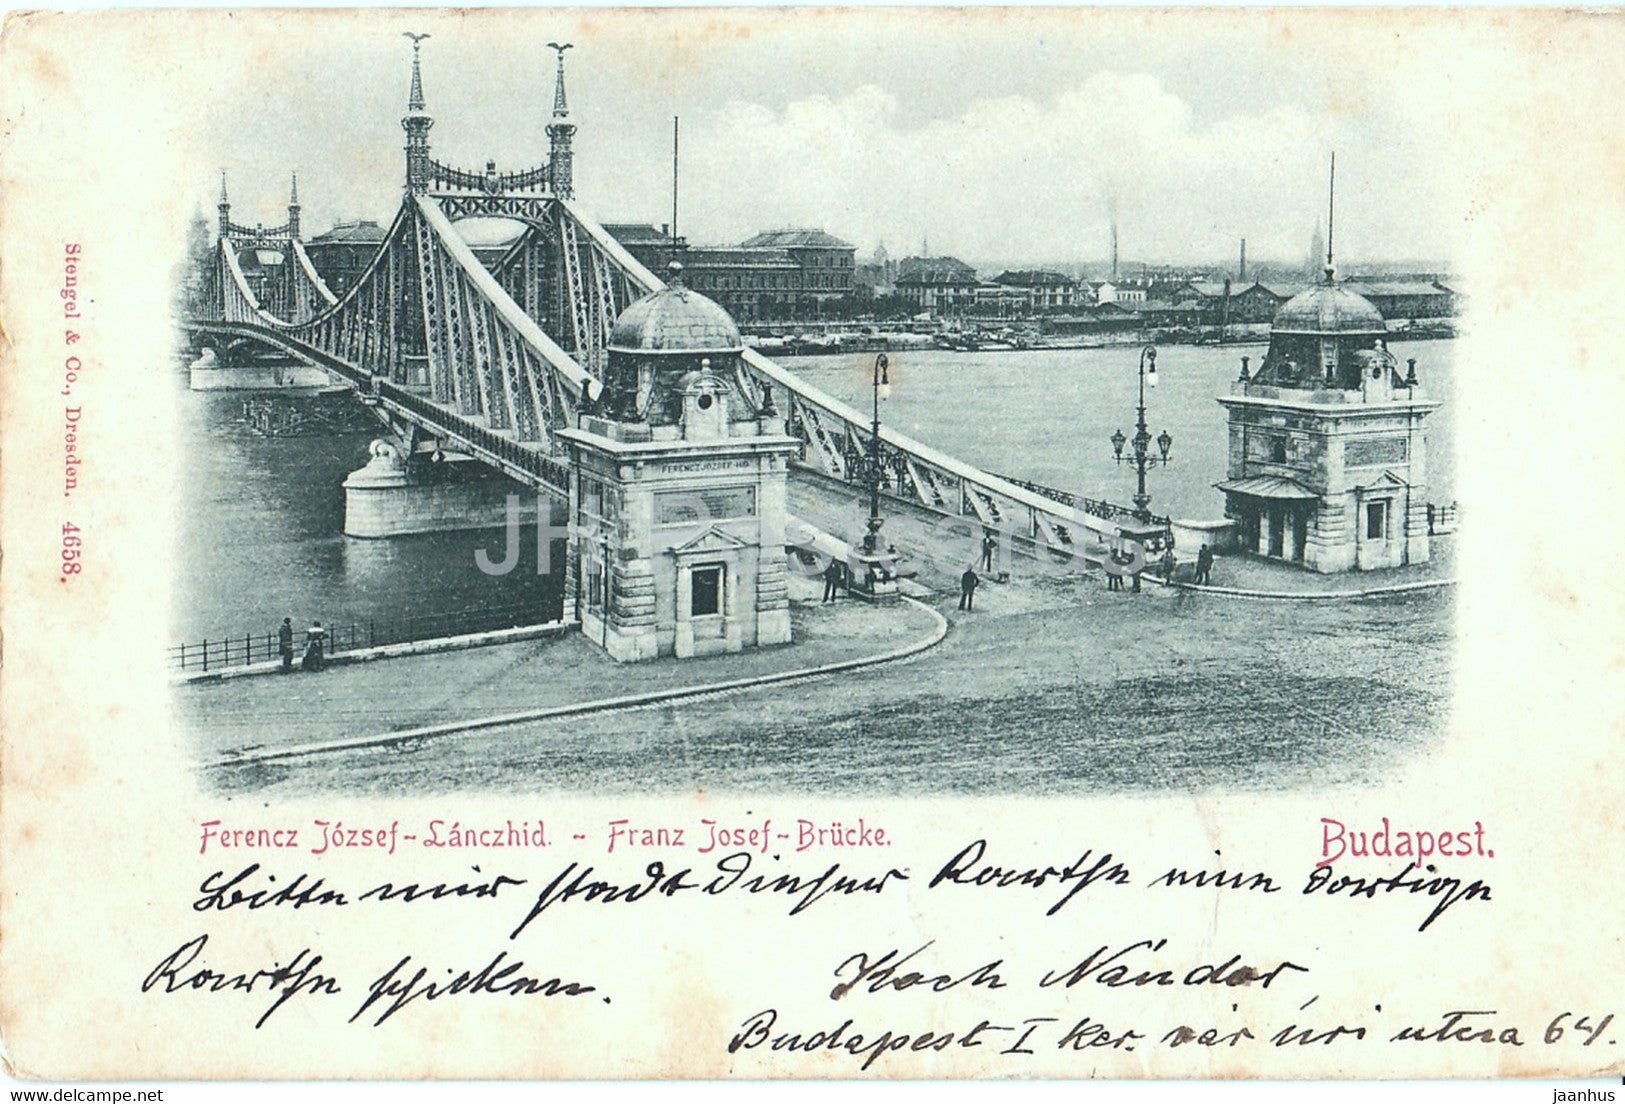 Budapest - Ferencz Jozsef Lanczhid - Franz Josef Brucke - bridge - 4658 - old postcard - 1898 - Hungary - used - JH Postcards